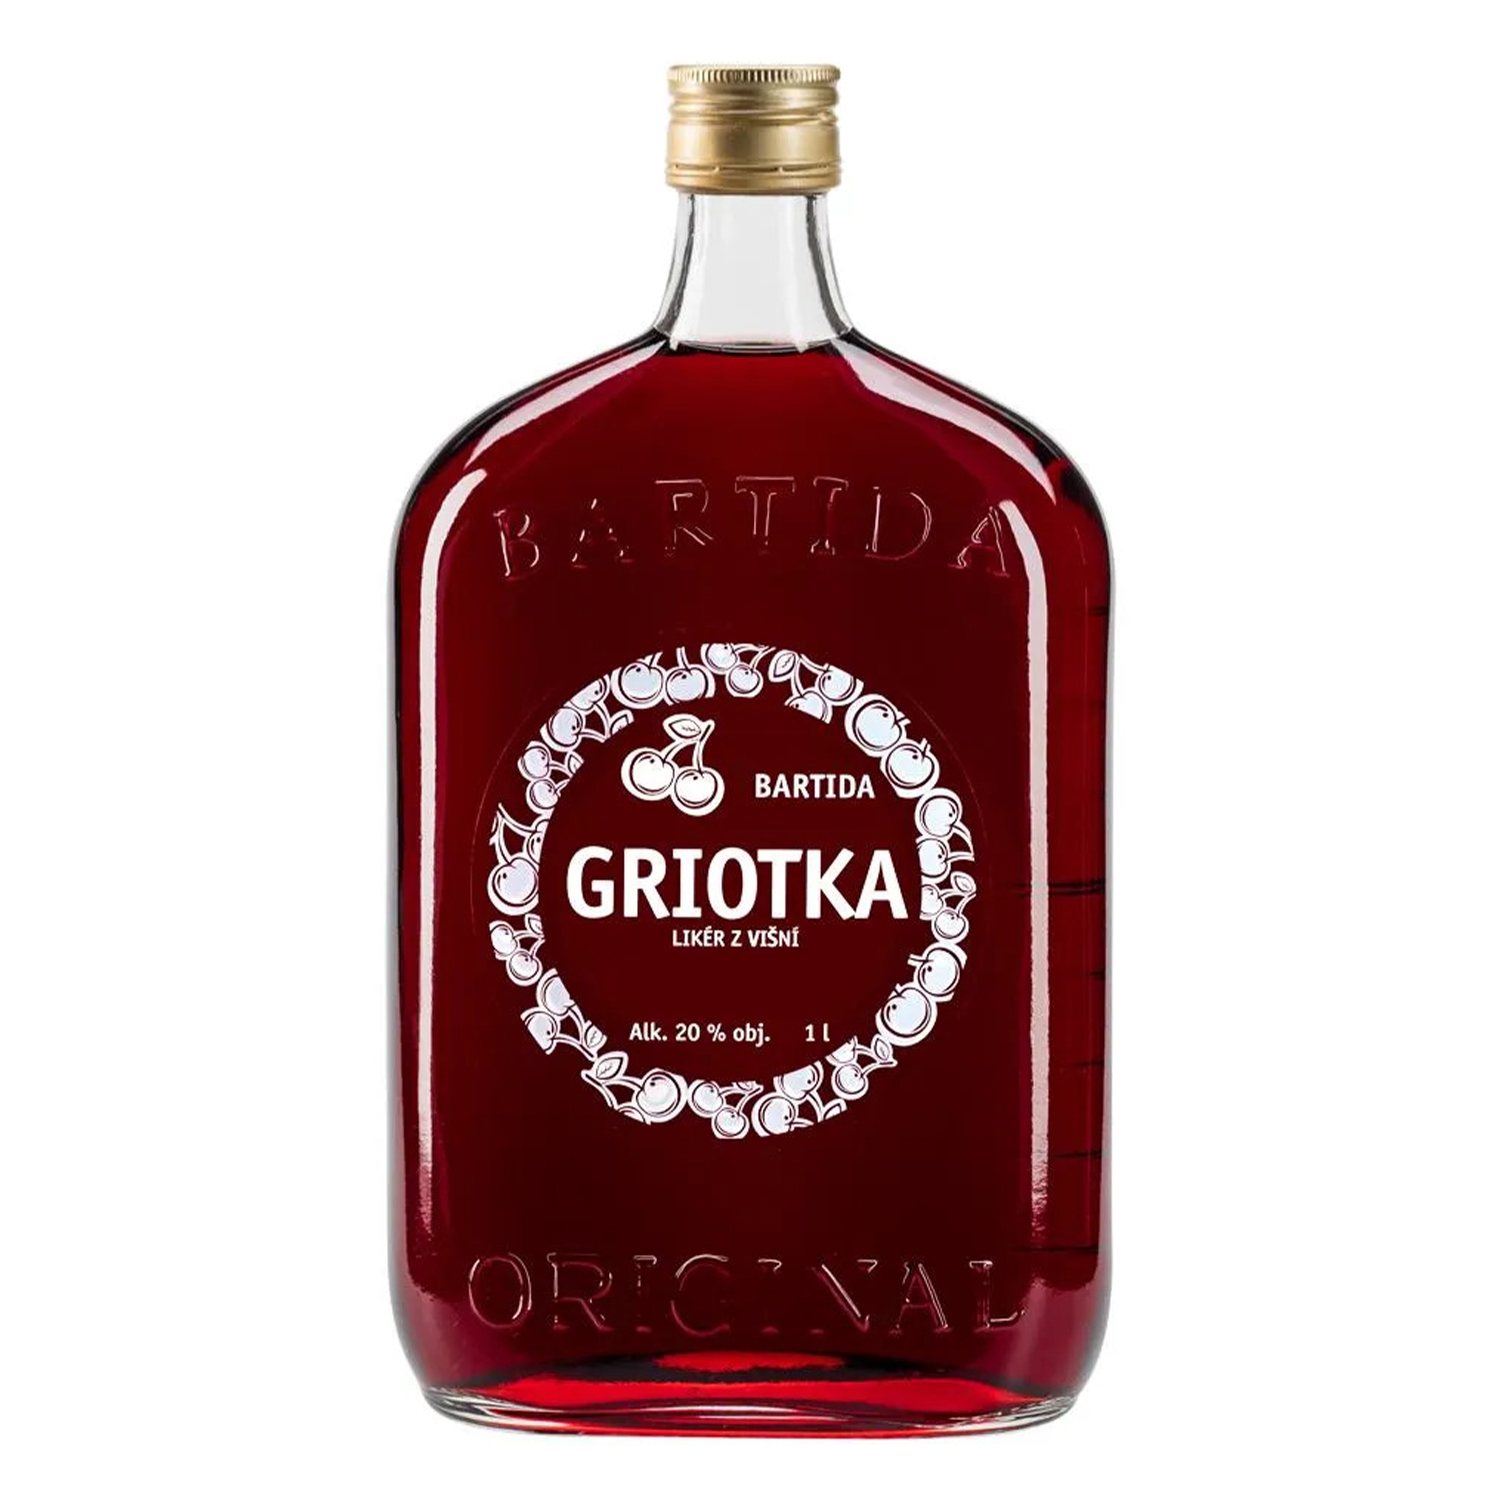 Bartida originál Griotka višňový likér 20% 1L